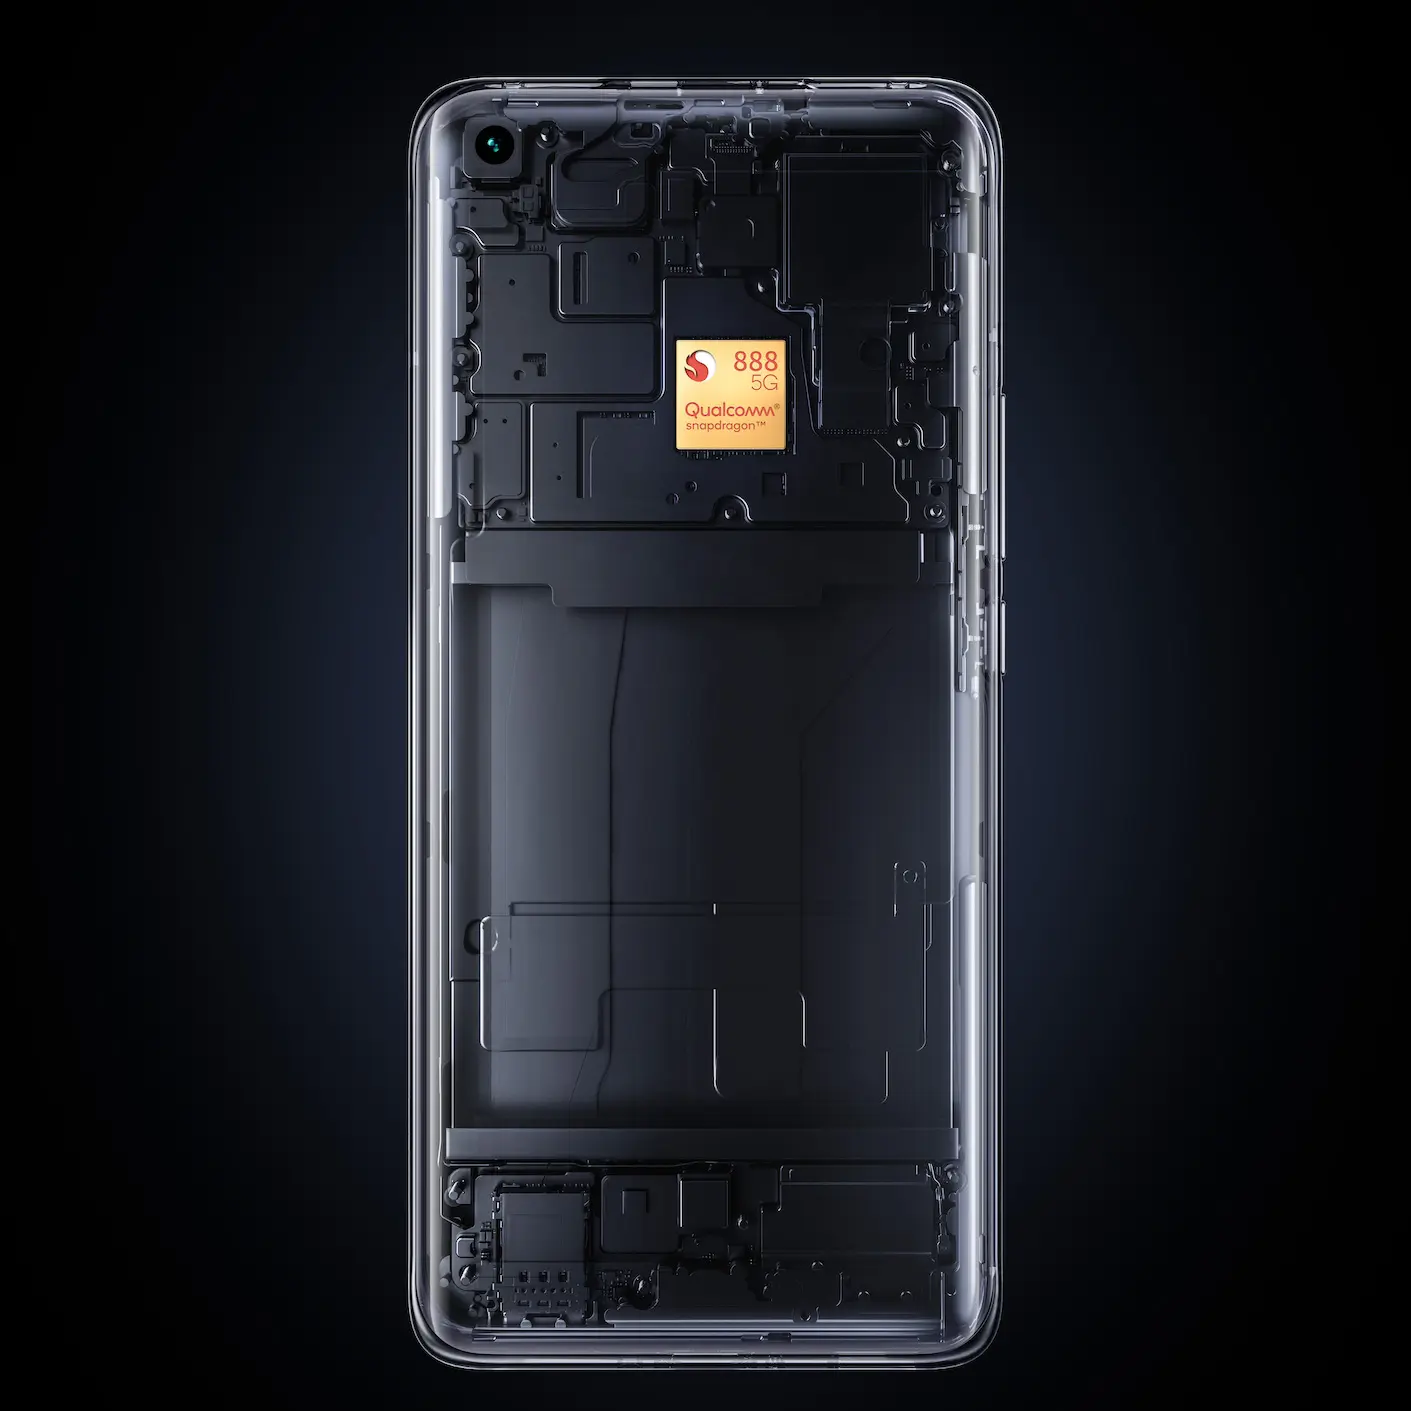 Xiaomi Mi 11 revealed Snapdragon 888